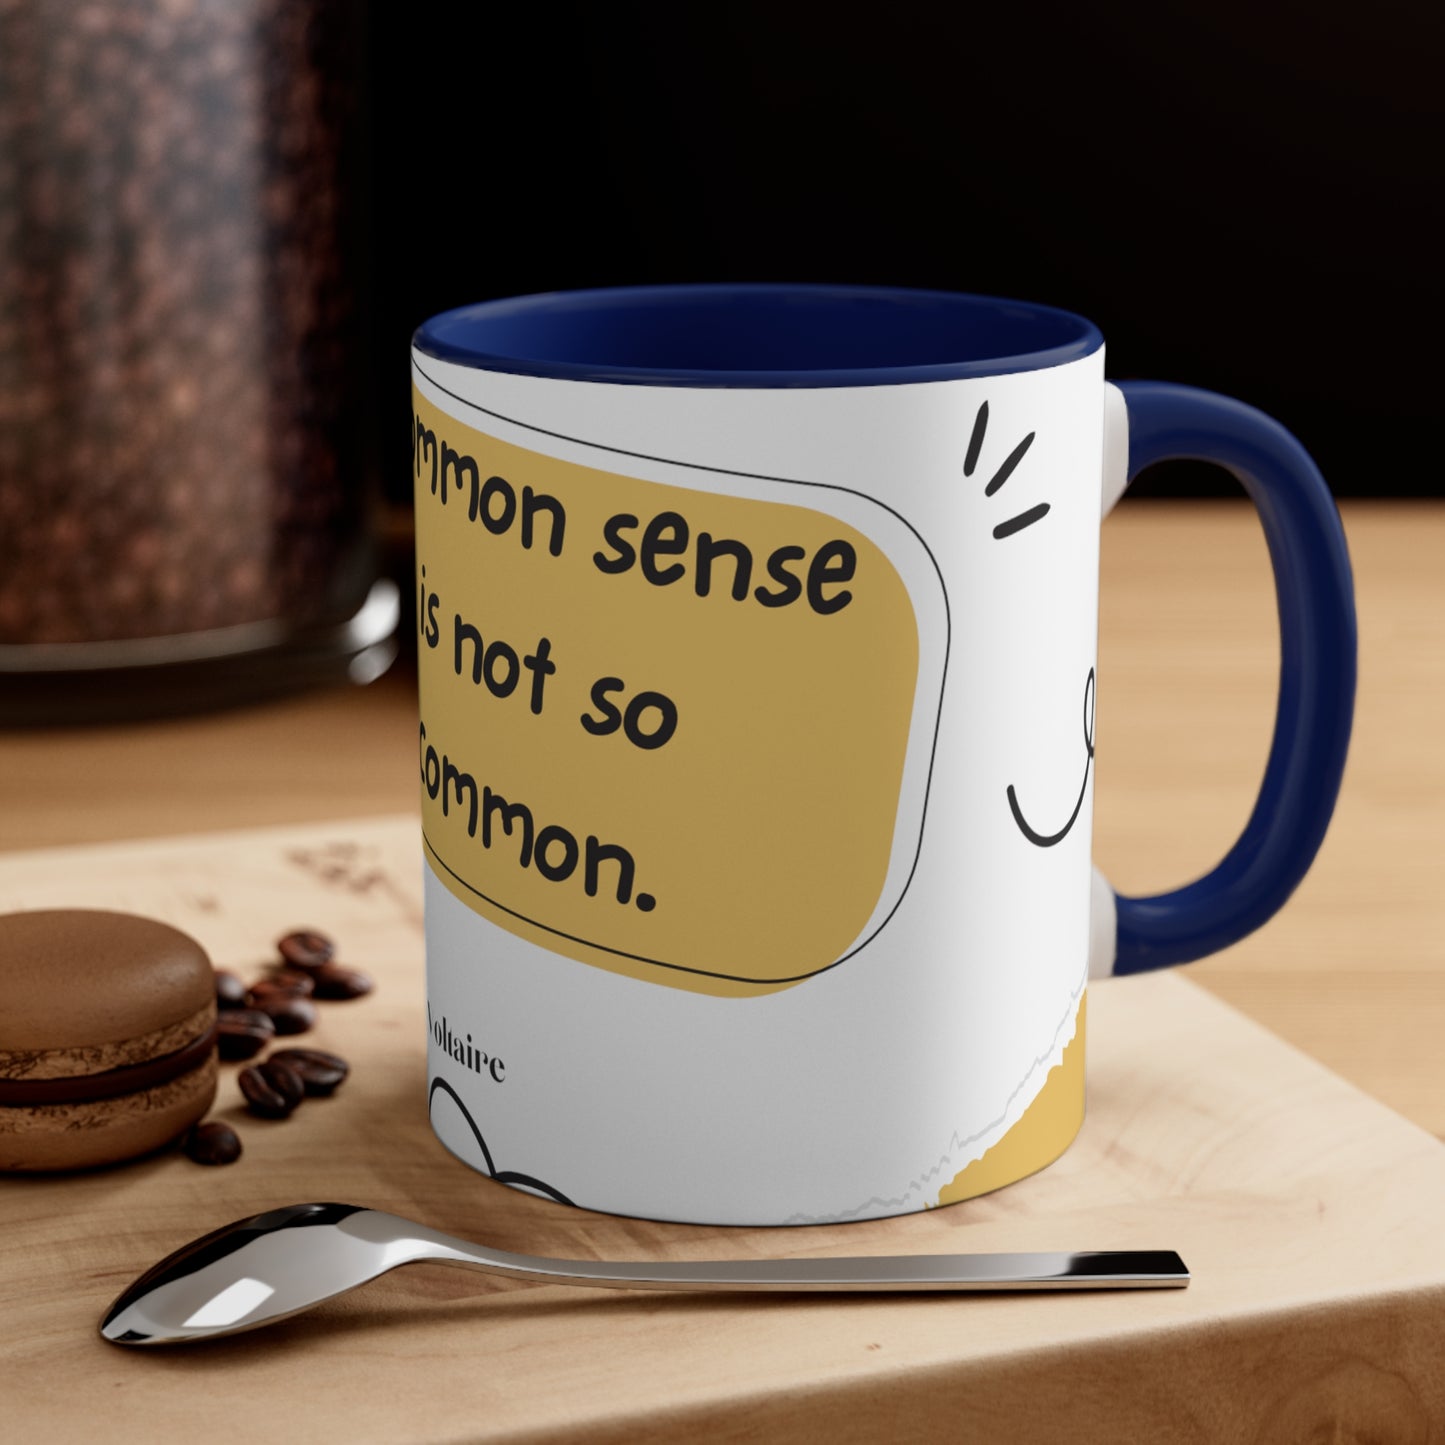 Common Sense，特色咖啡杯，11 盎司